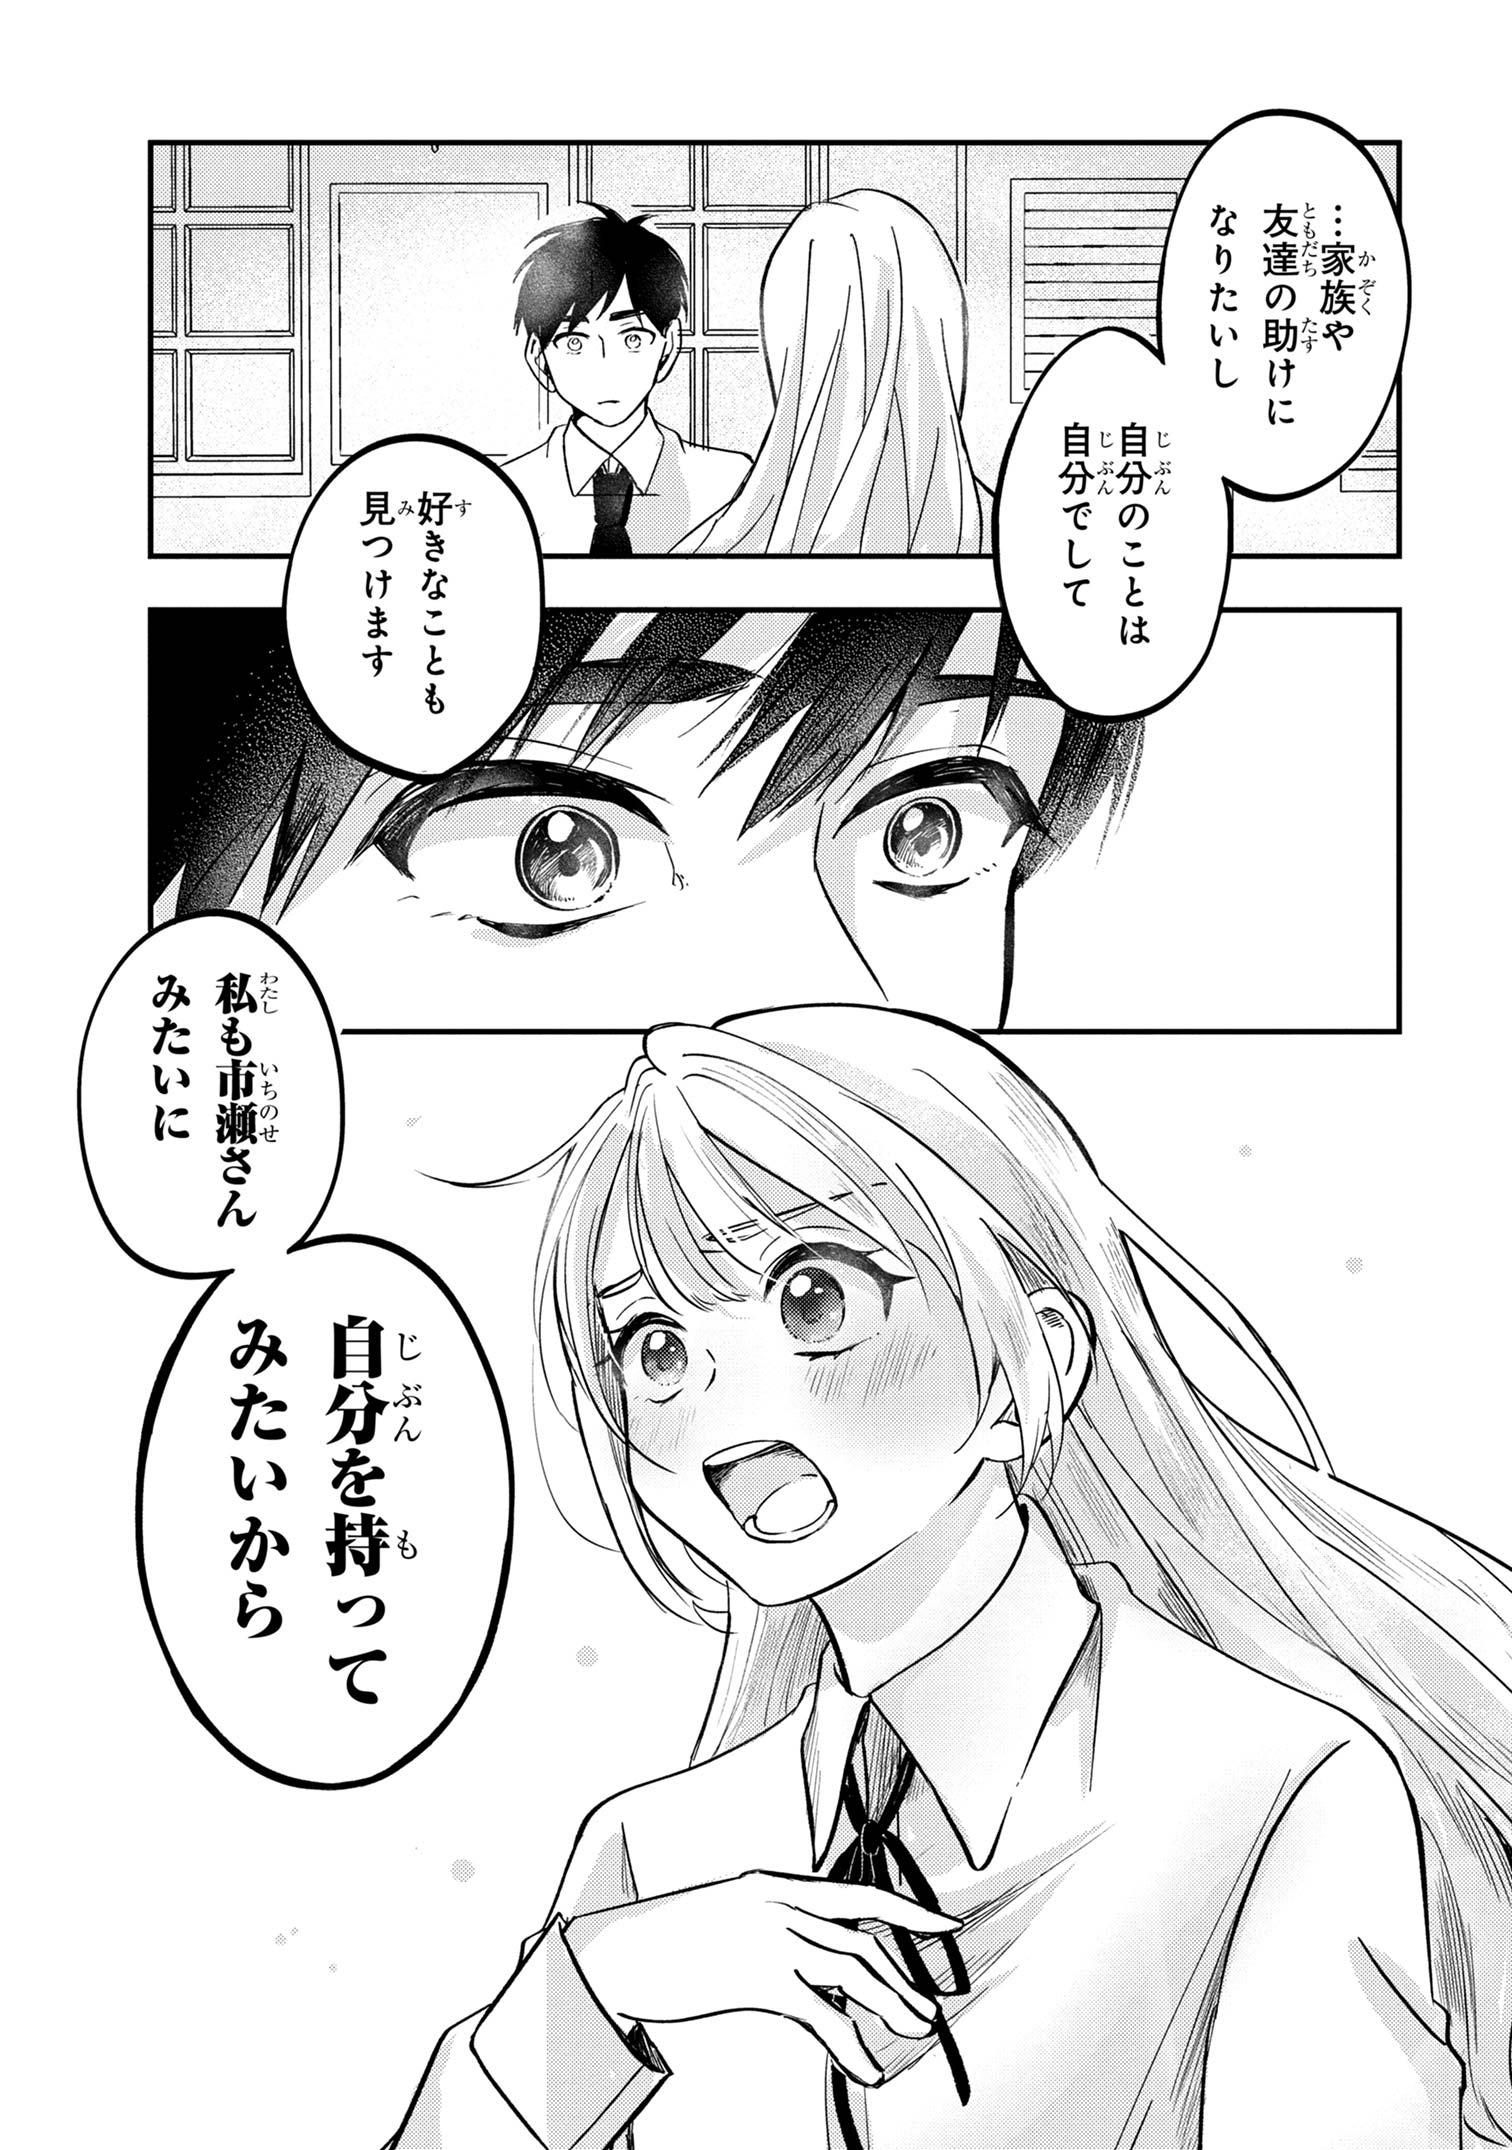 Aisare Tenshi na Classmate ga, Ore ni Dake Itazura ni Hohoemu - Chapter 1 - Page 34